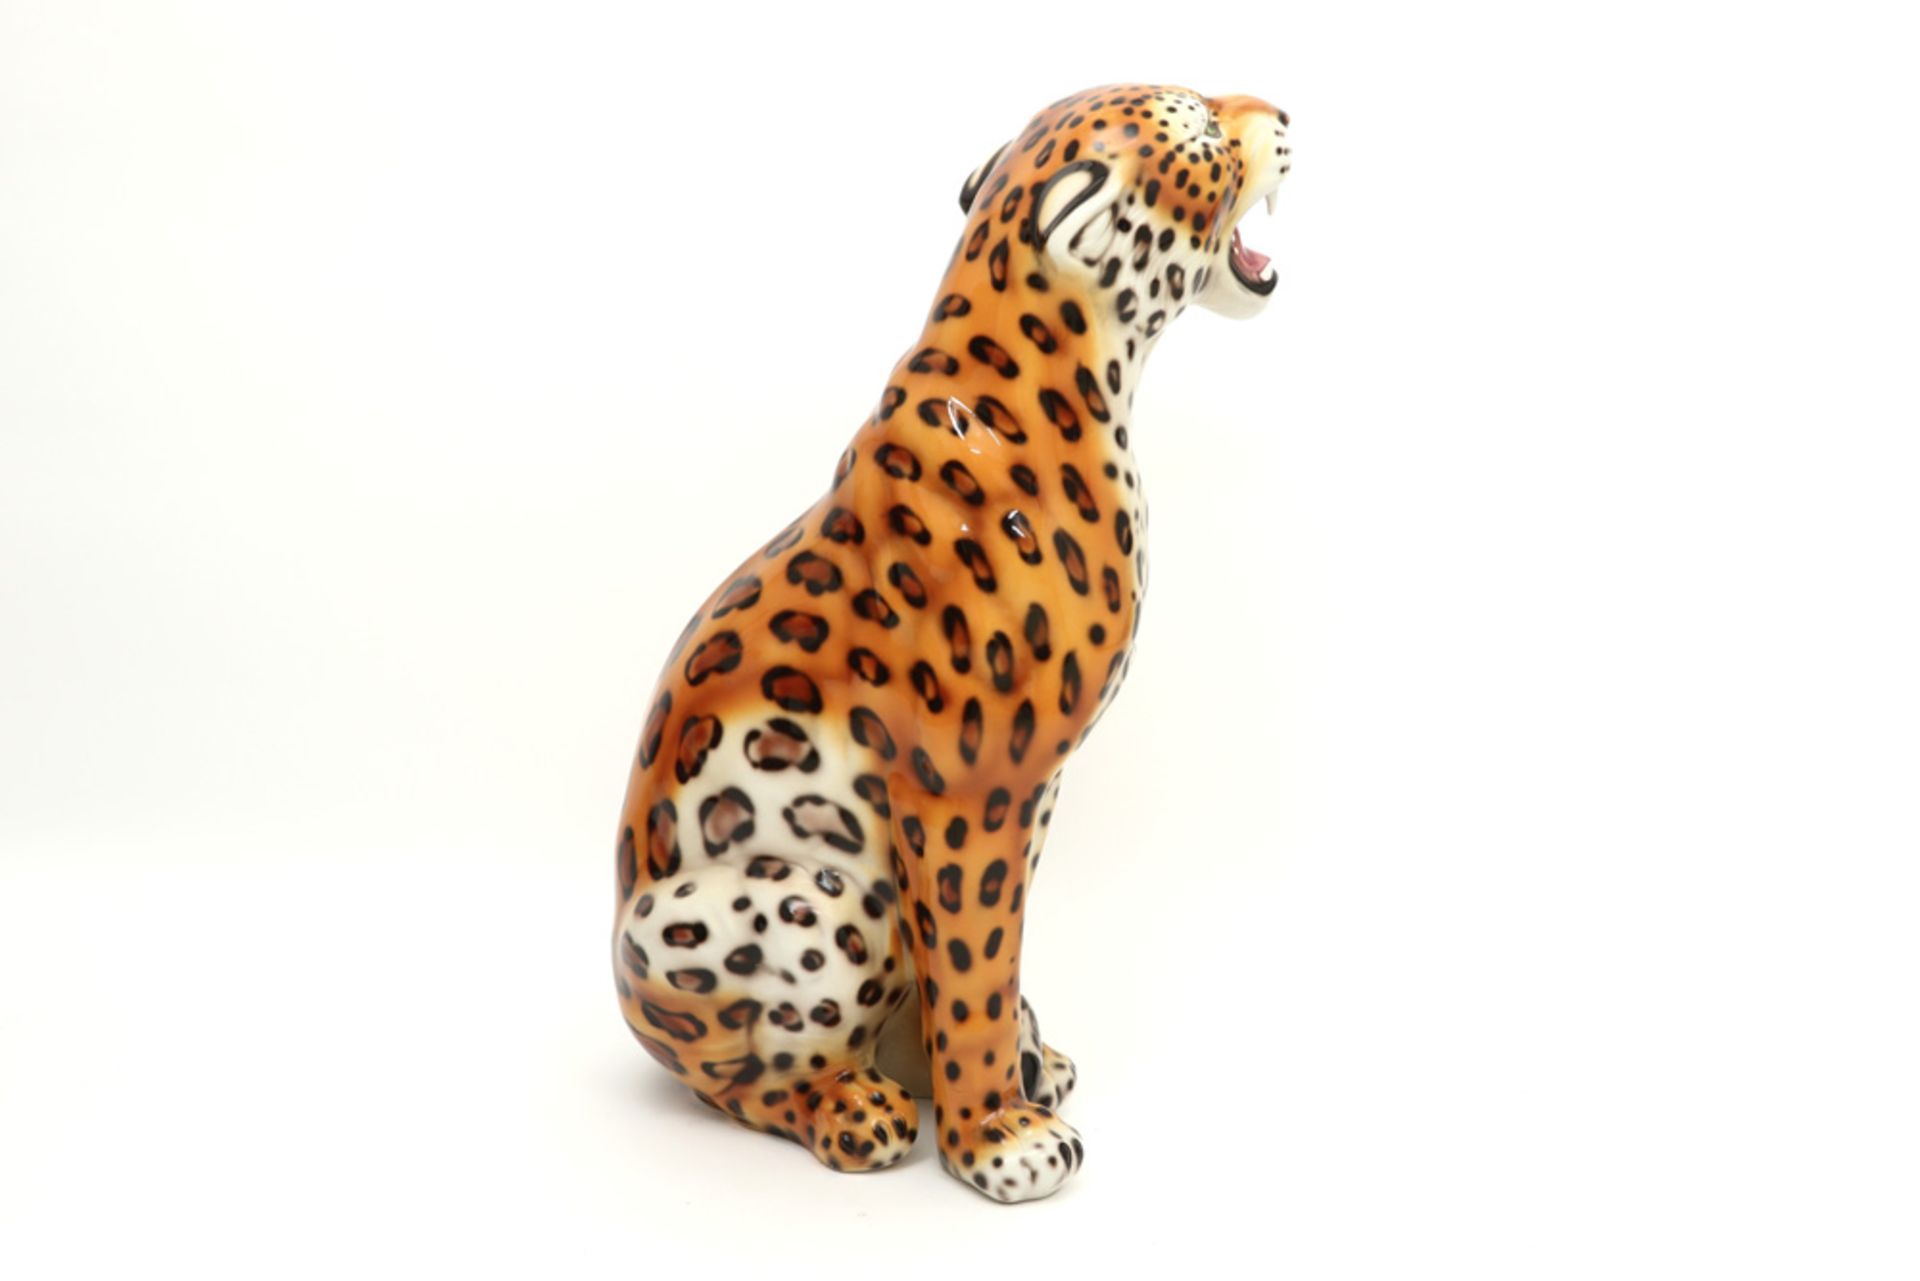 fifties'/sxties' Italian "Sitting leopard" sculpture in ceramic - Image 2 of 5